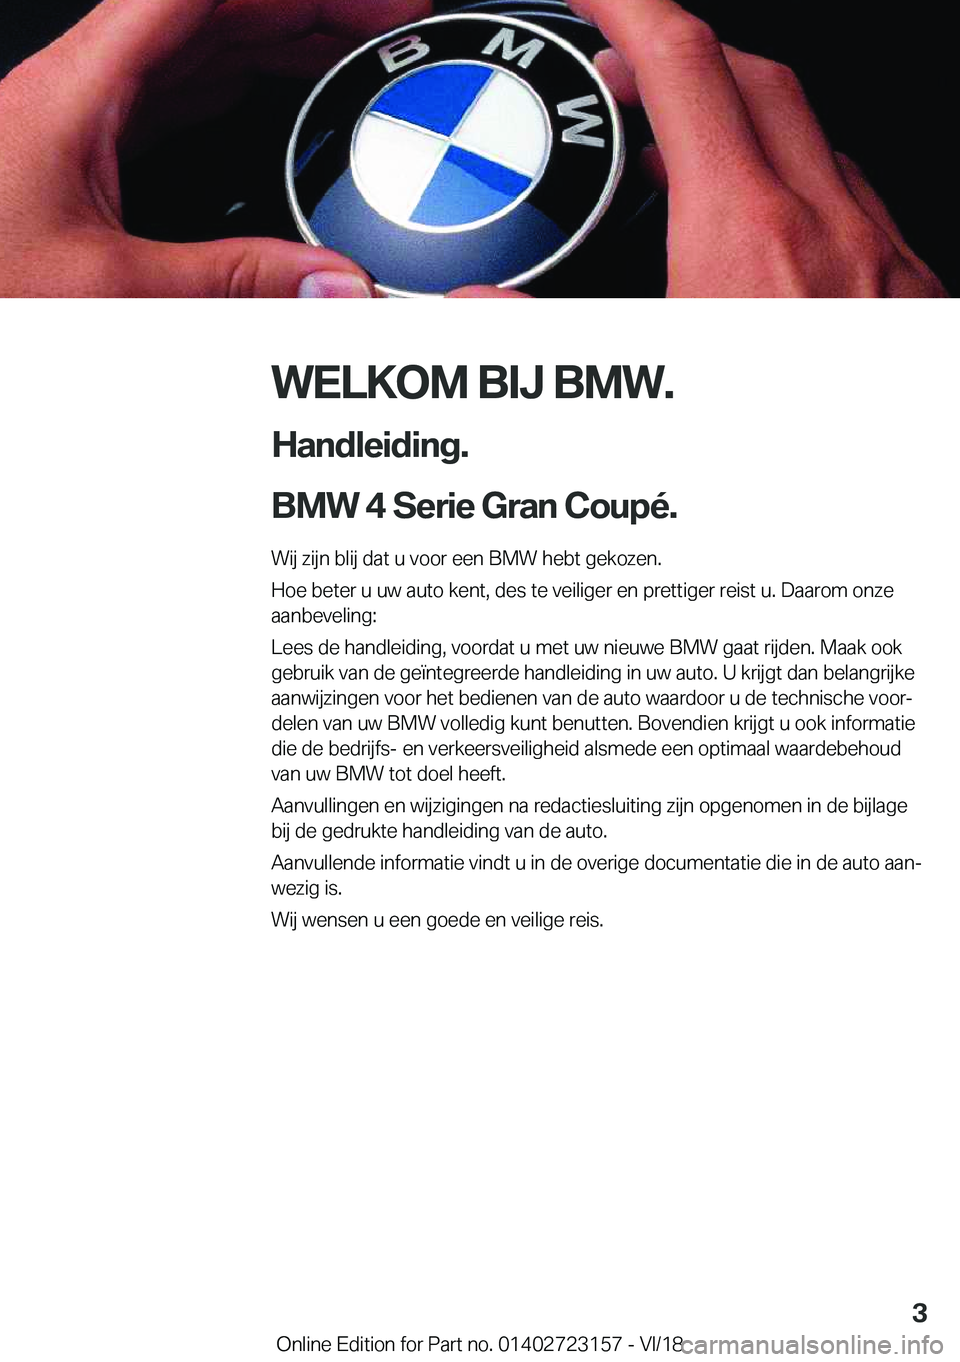 BMW 4 SERIES GRAN COUPE 2019  Instructieboekjes (in Dutch) �W�E�L�K�O�M��B�I�J��B�M�W�.
�H�a�n�d�l�e�i�d�i�n�g�.
�B�M�W��4��S�e�r�i�e��G�r�a�n��C�o�u�p�